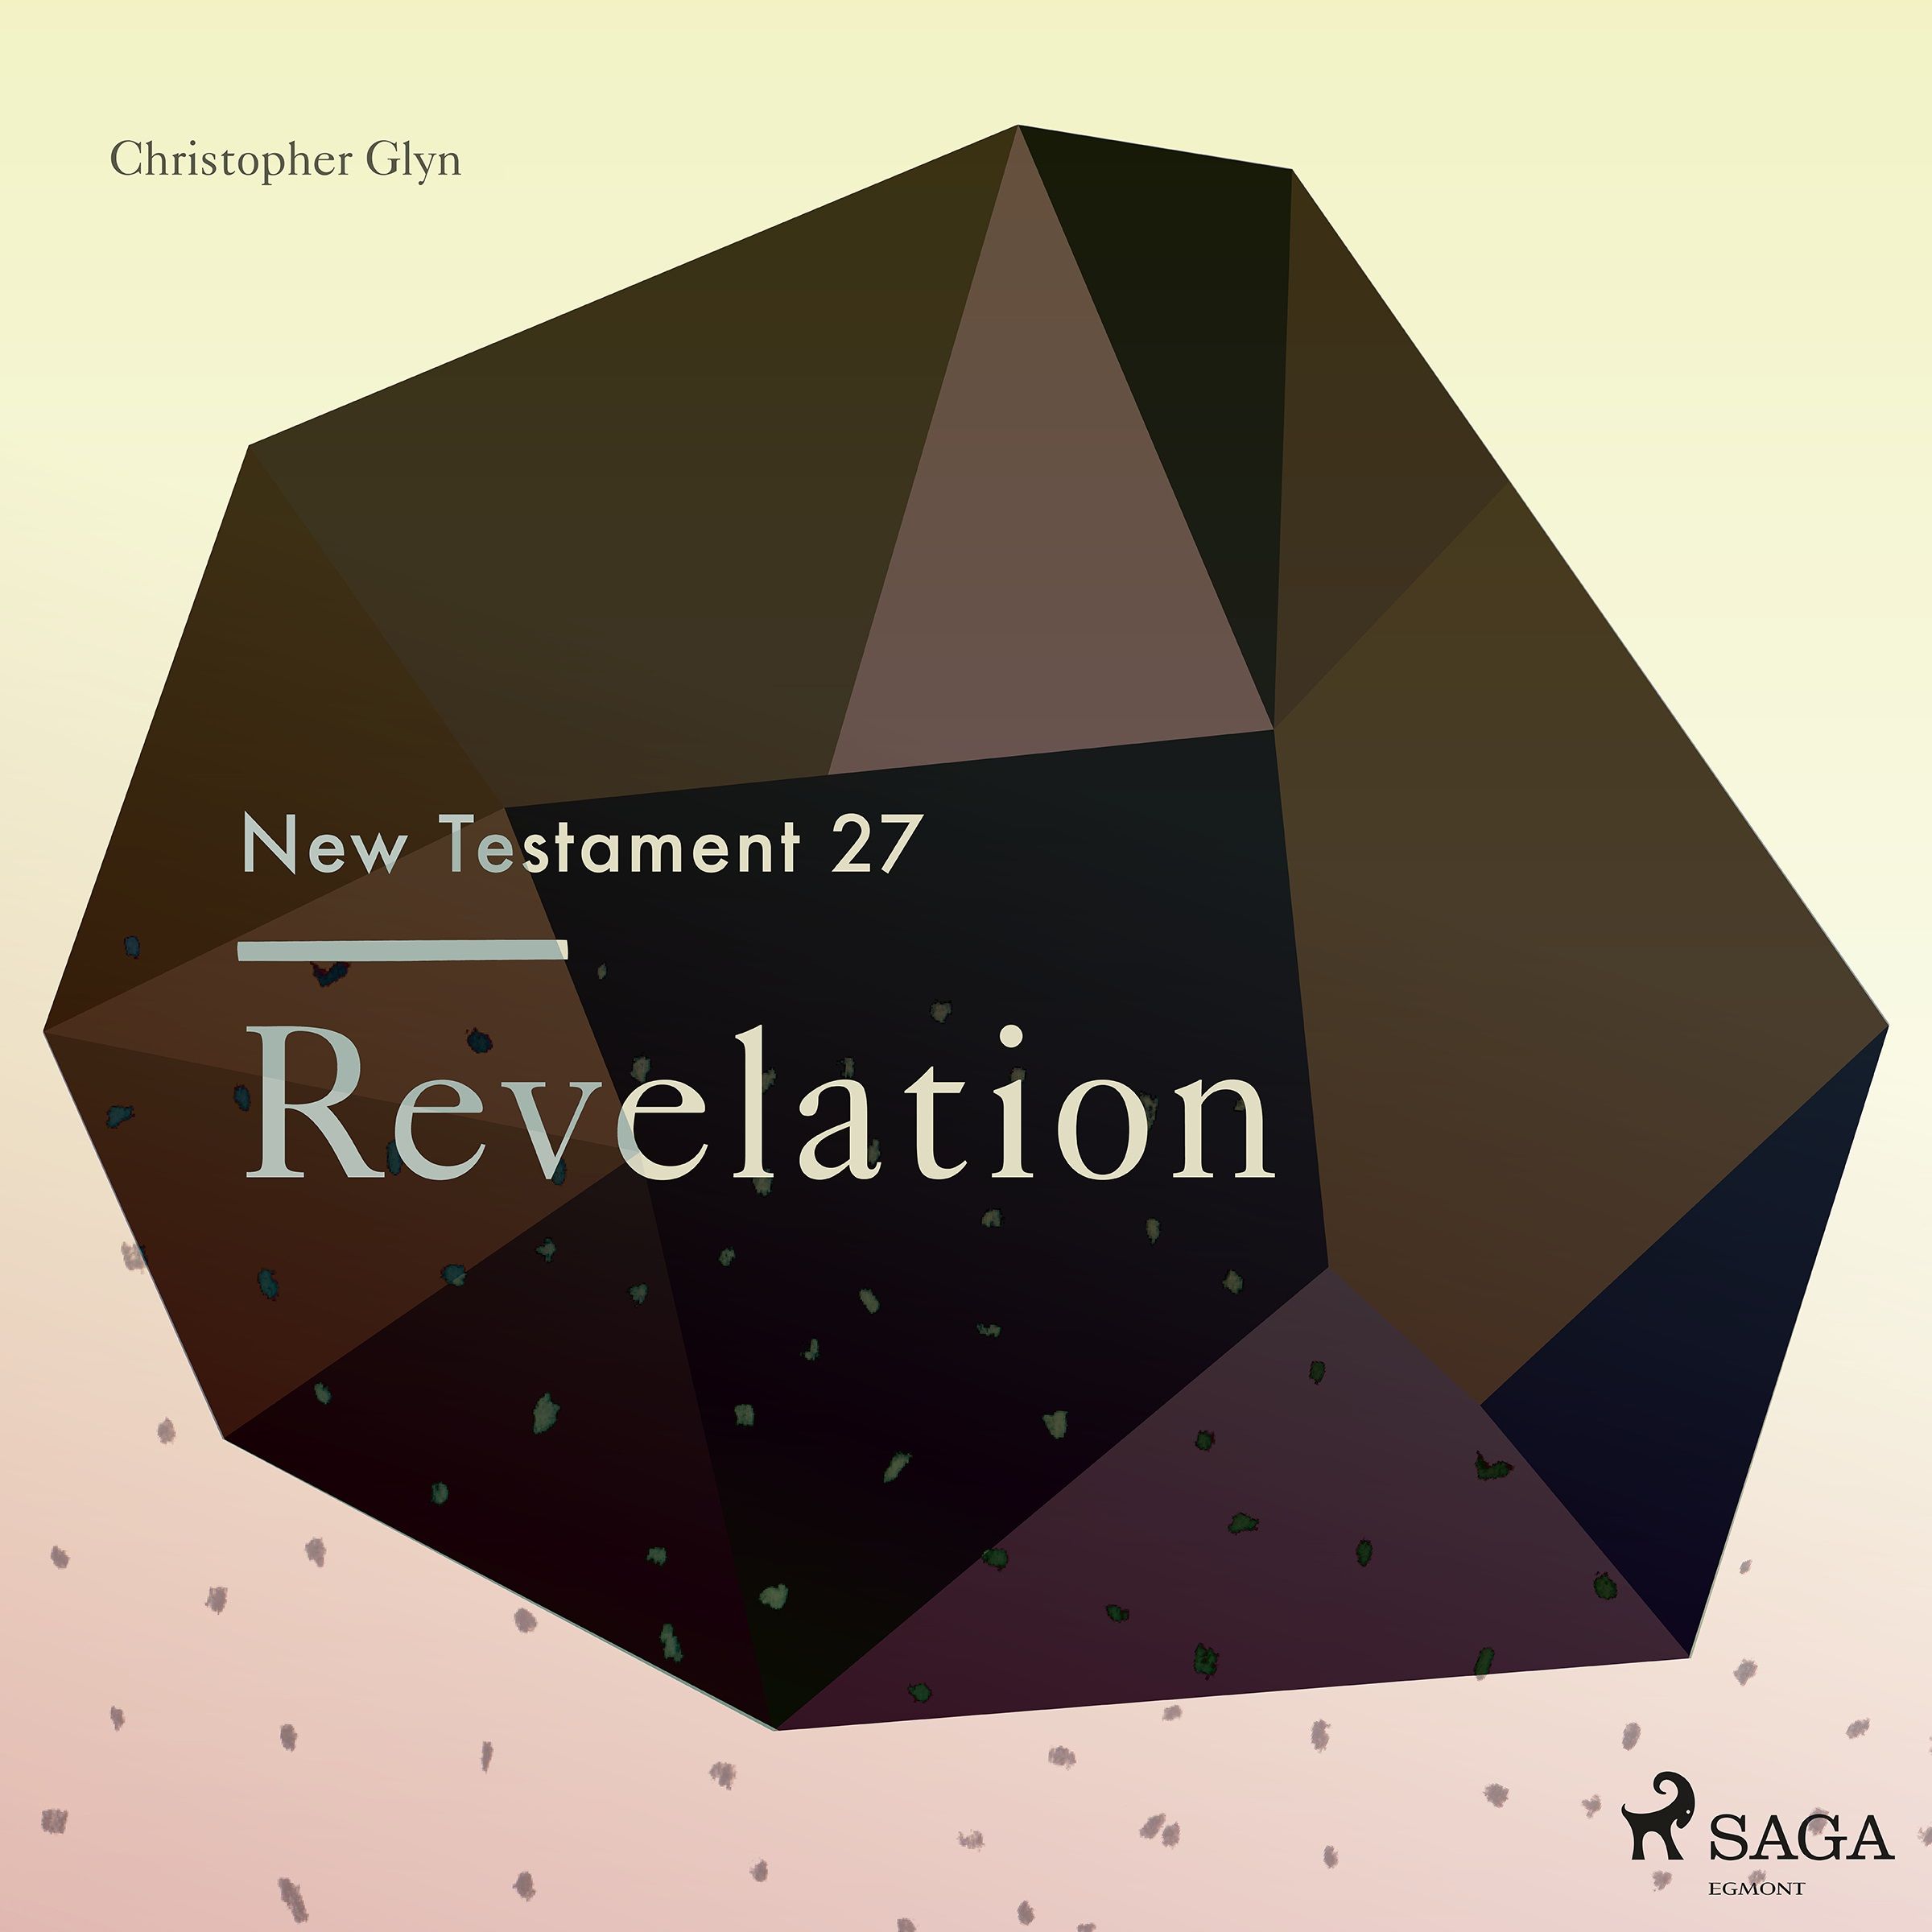 The New Testament 27 - Revelation, ljudbok av Christopher Glyn